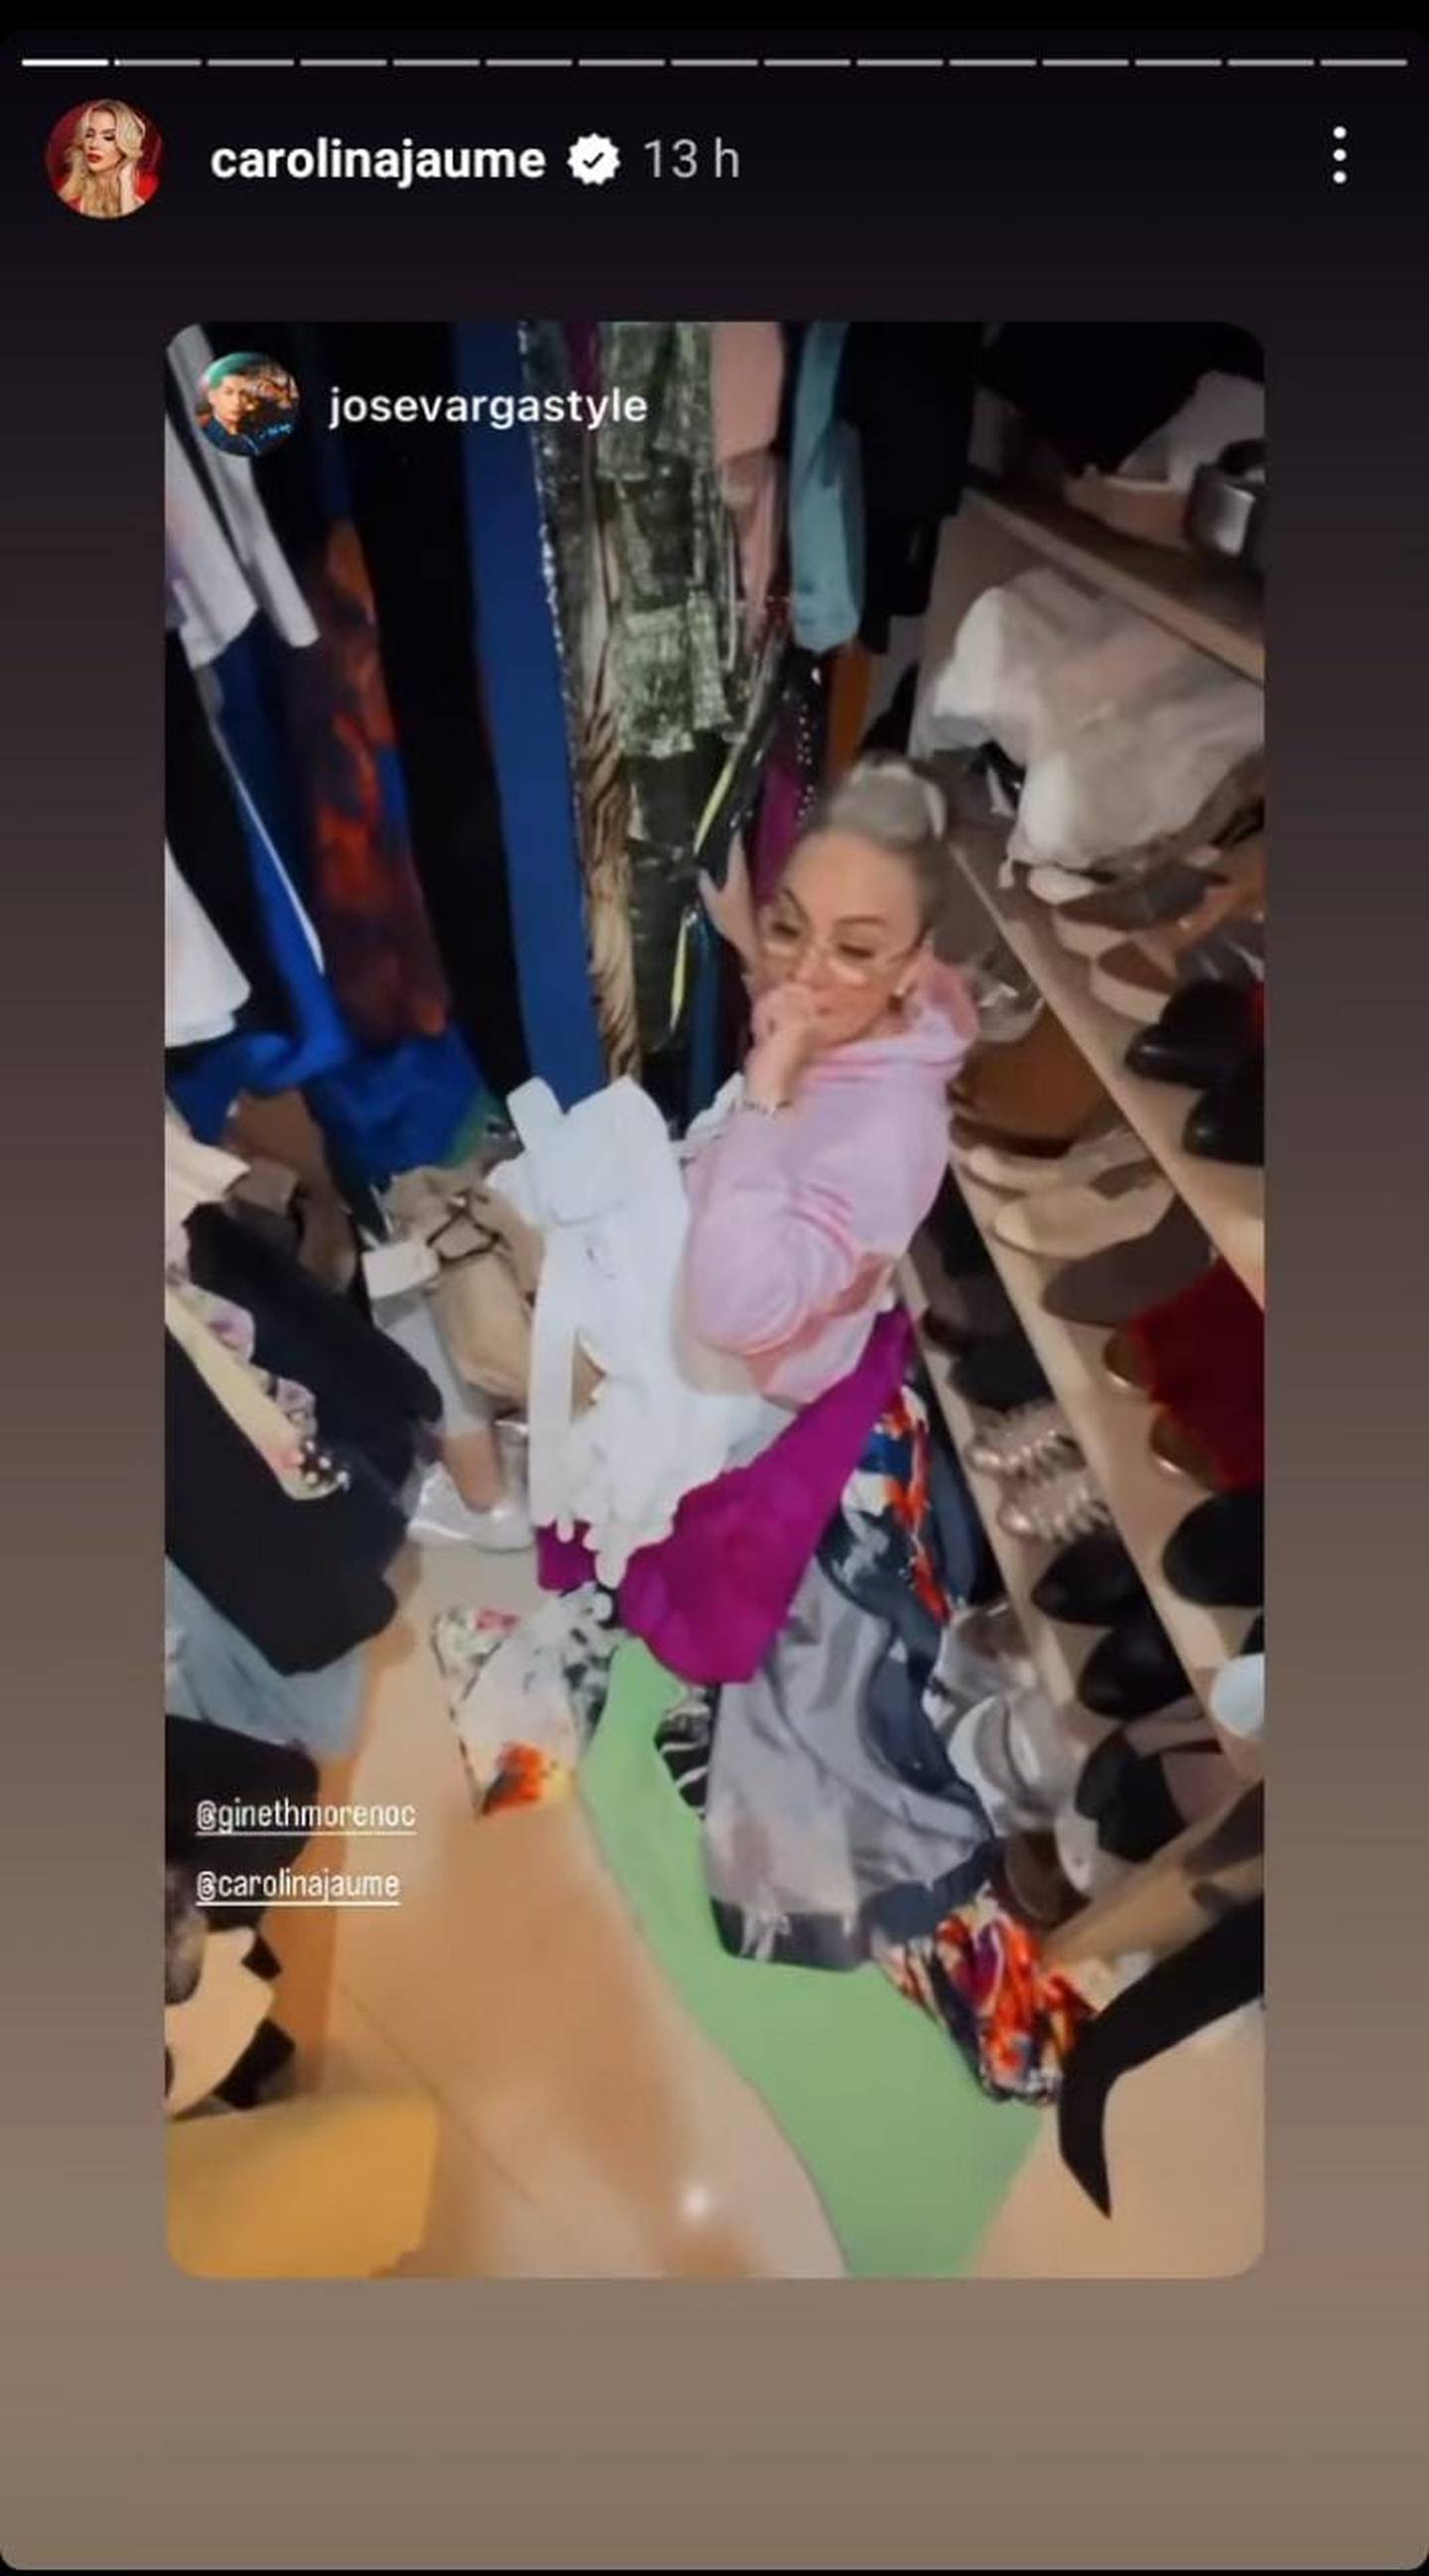 "Carolina Jaume muestra su closet en Instagram".